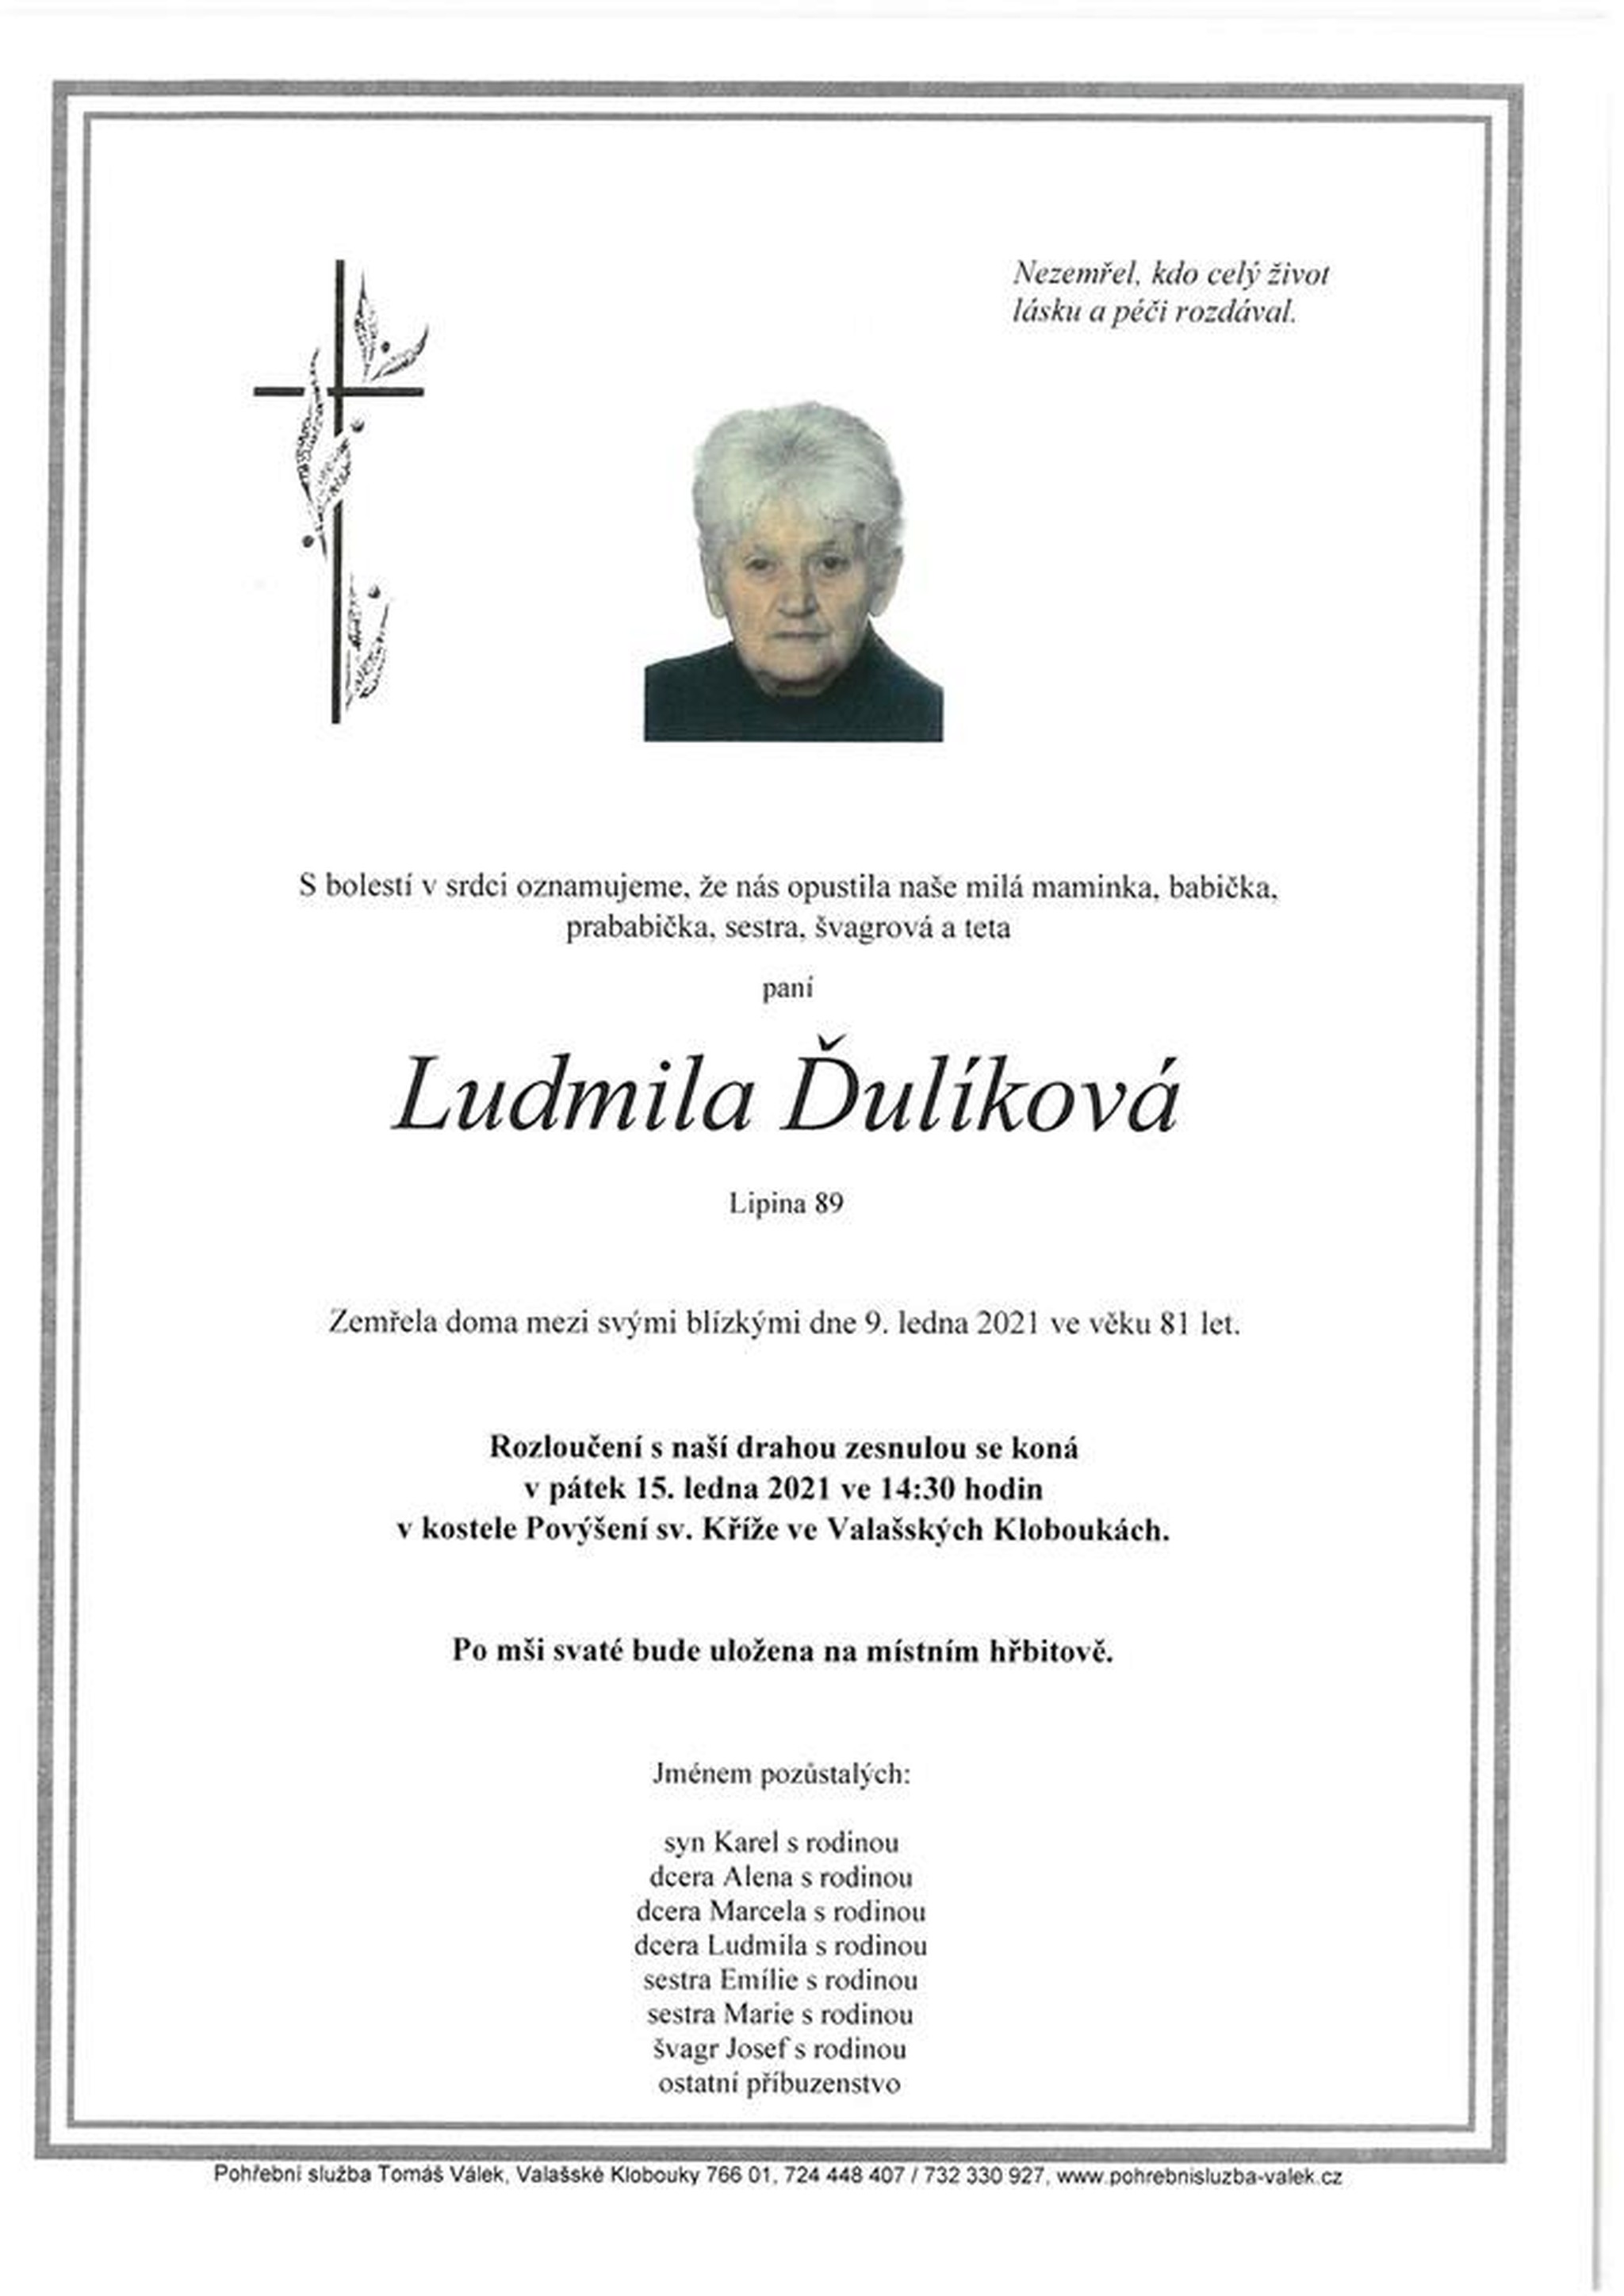 Ludmila Ďulíková